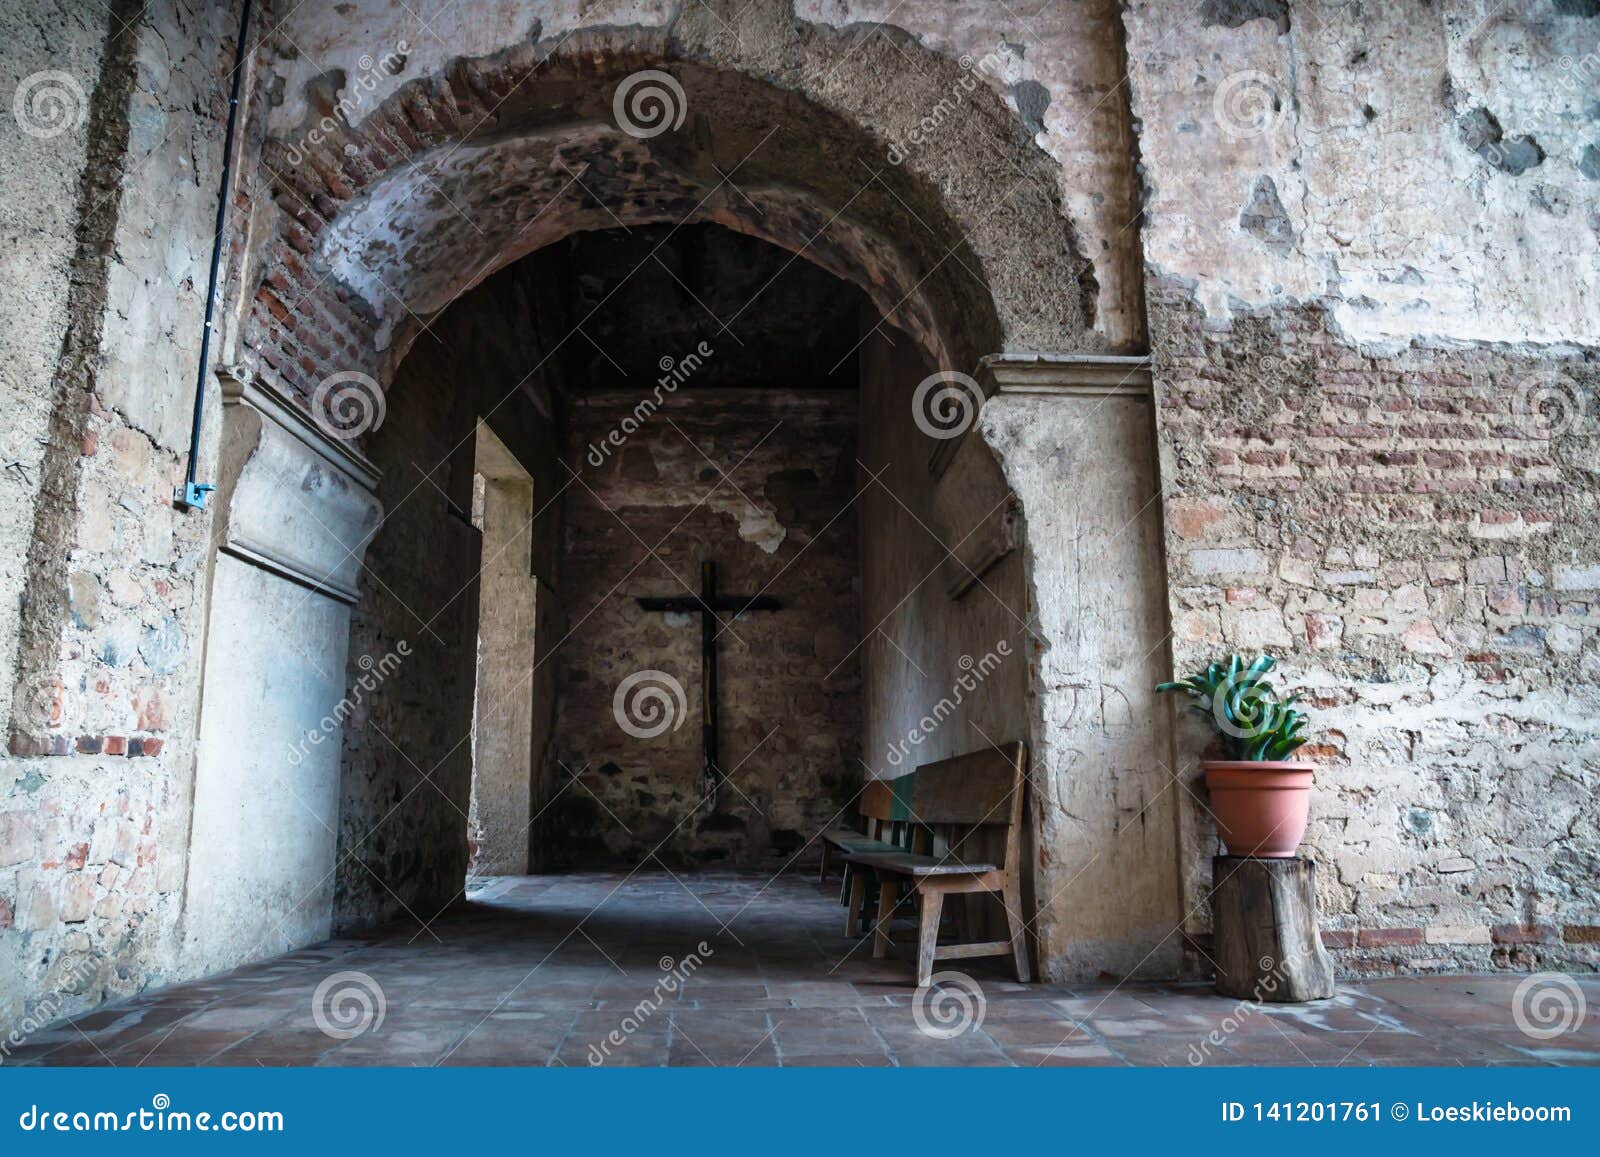 hallway of hermano pedro monestery with cross, plant and arch, antigua, guatemala